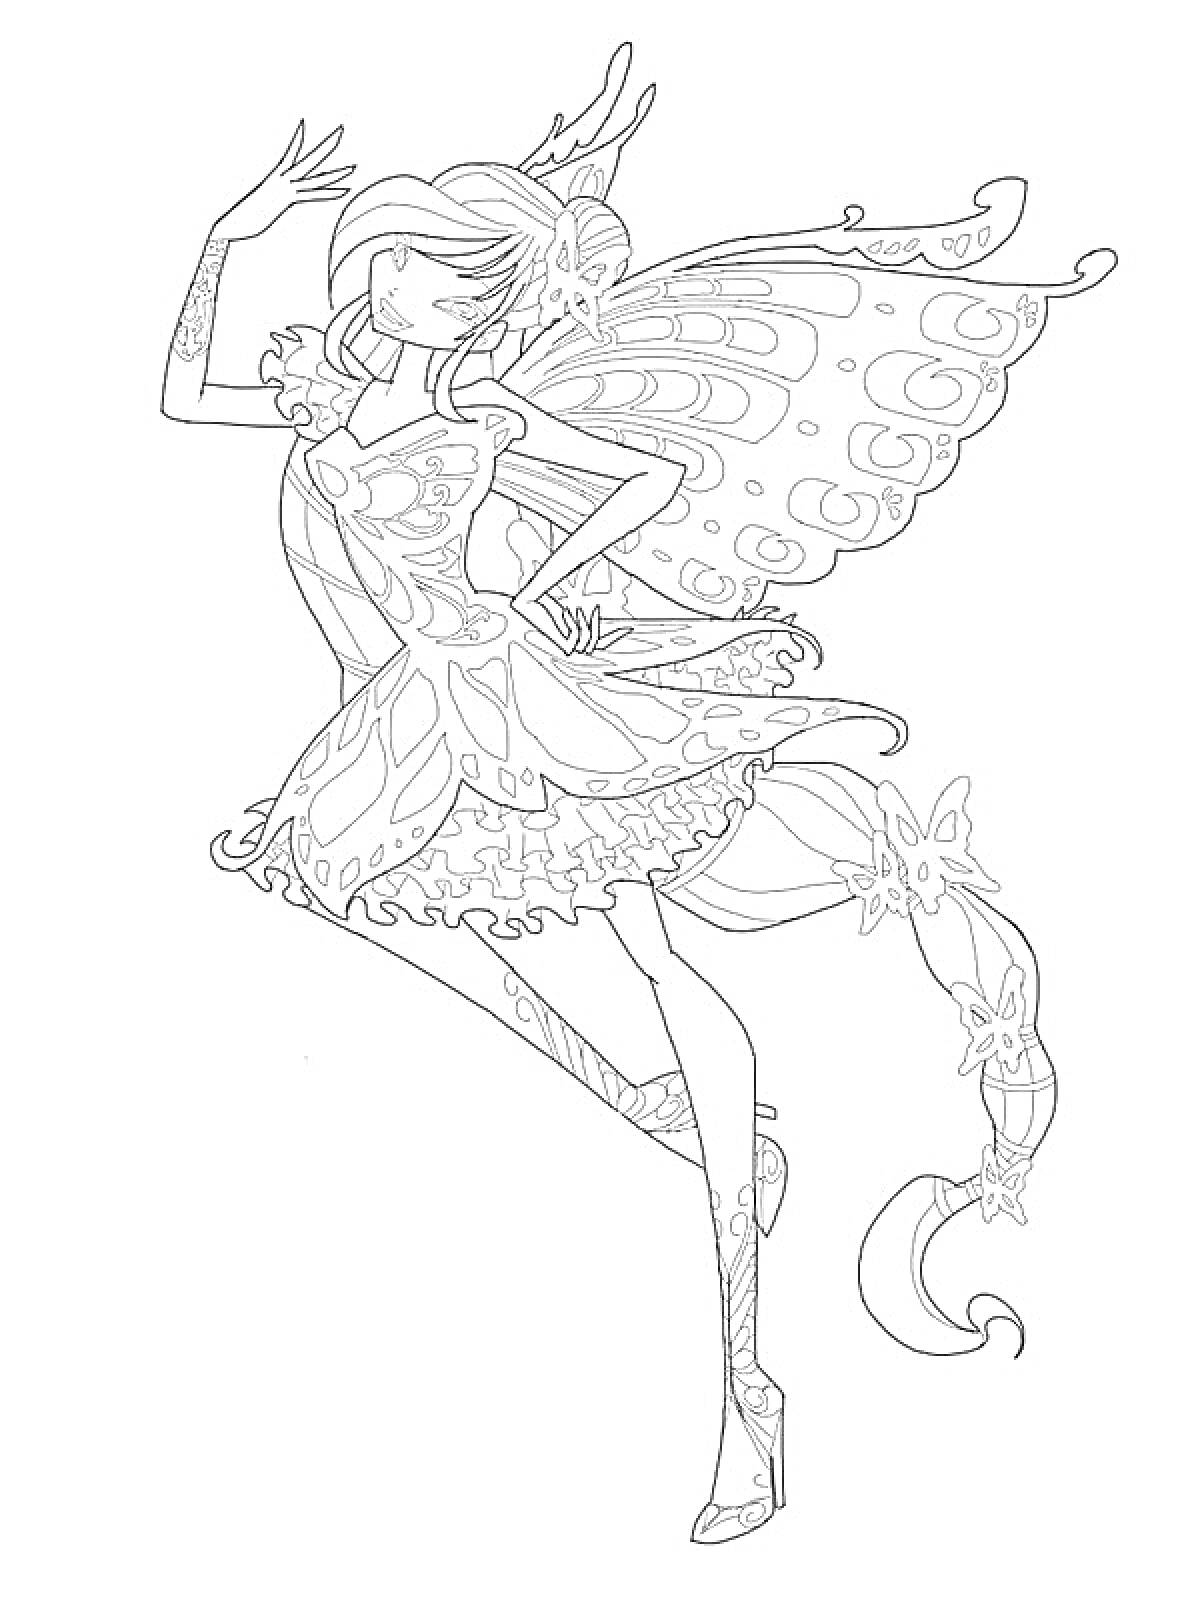 Раскраска Фея в стиле Винкс Баттерфликс с крыльями, платьем и сапогами